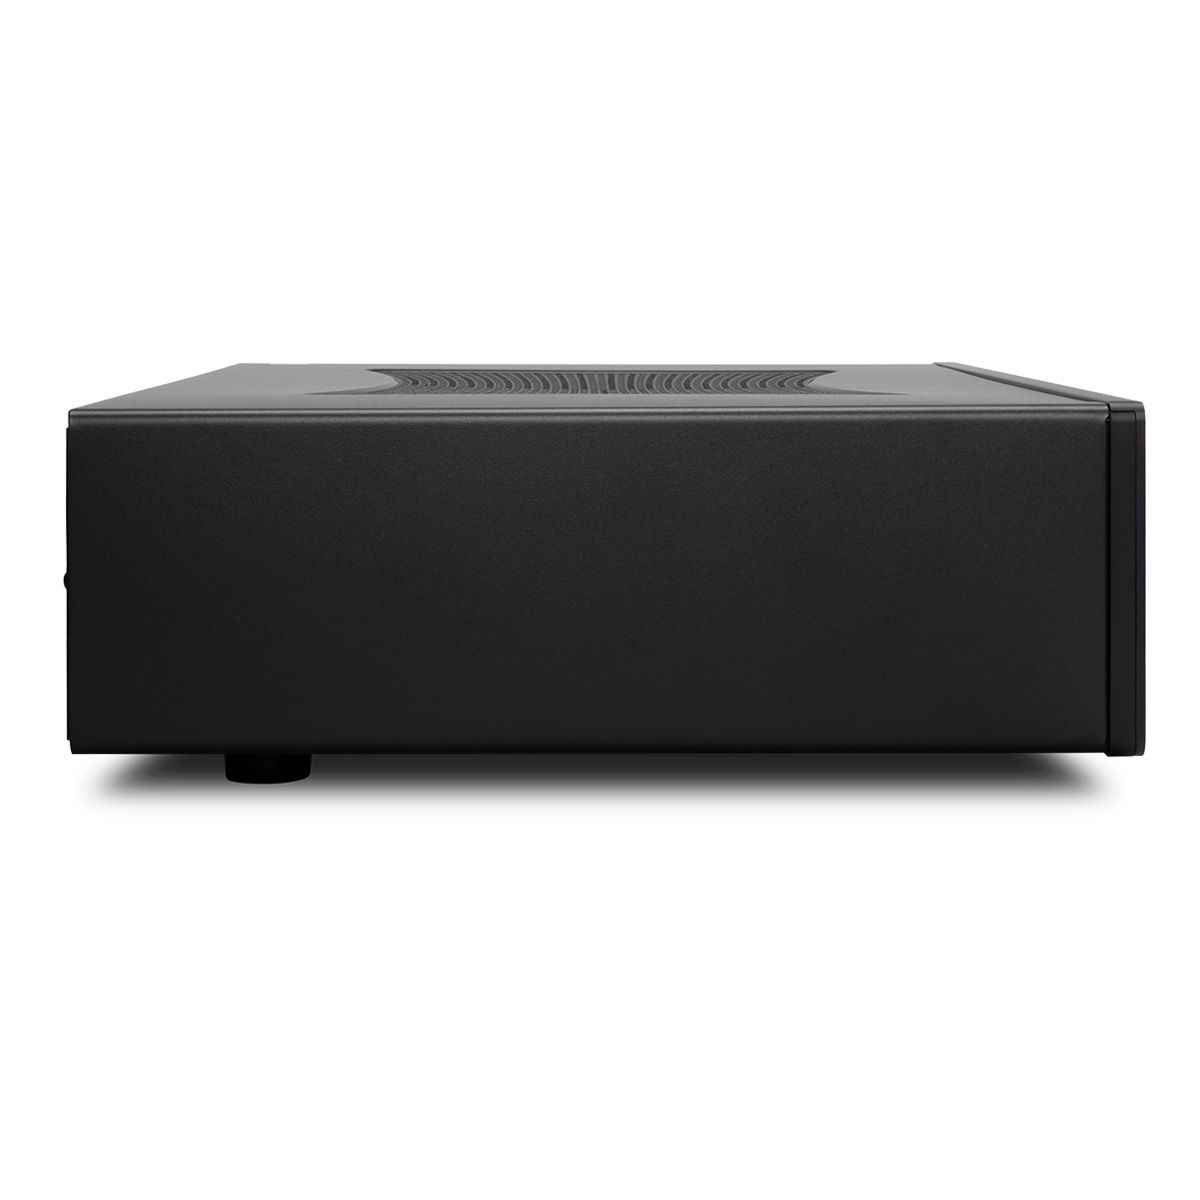 Cambridge Audio CXA81 Integrated Amplifier - Black Edition right side view